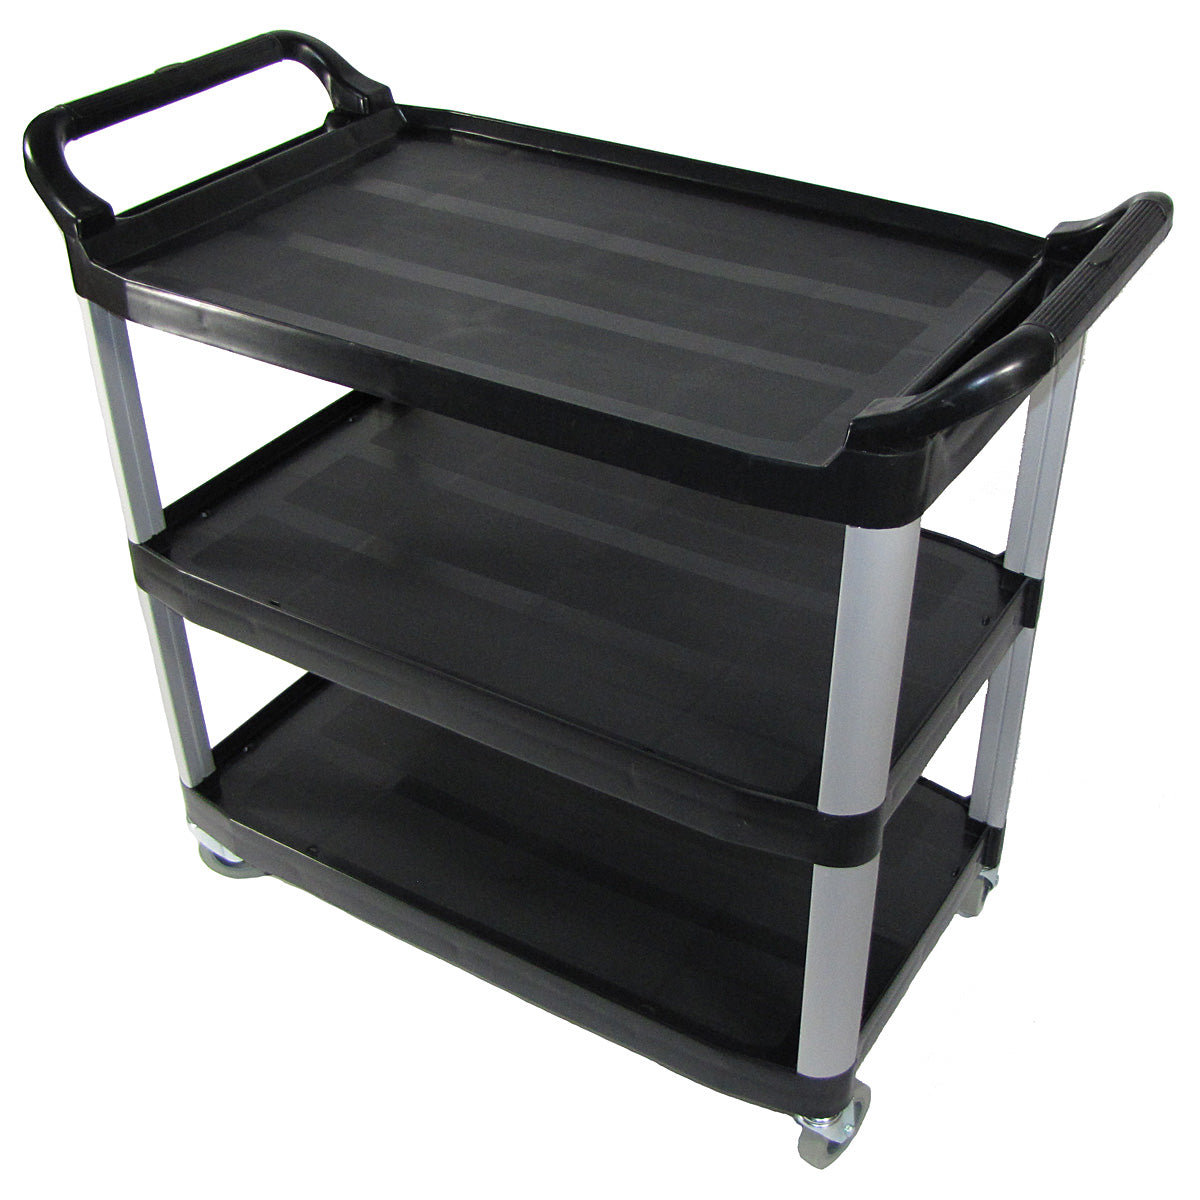 RW Clean Black Plastic Small Heavy-Duty Rolling Utility Cart - 3 Shelves -  32 x 17 x 35 3/4 - 1 count box